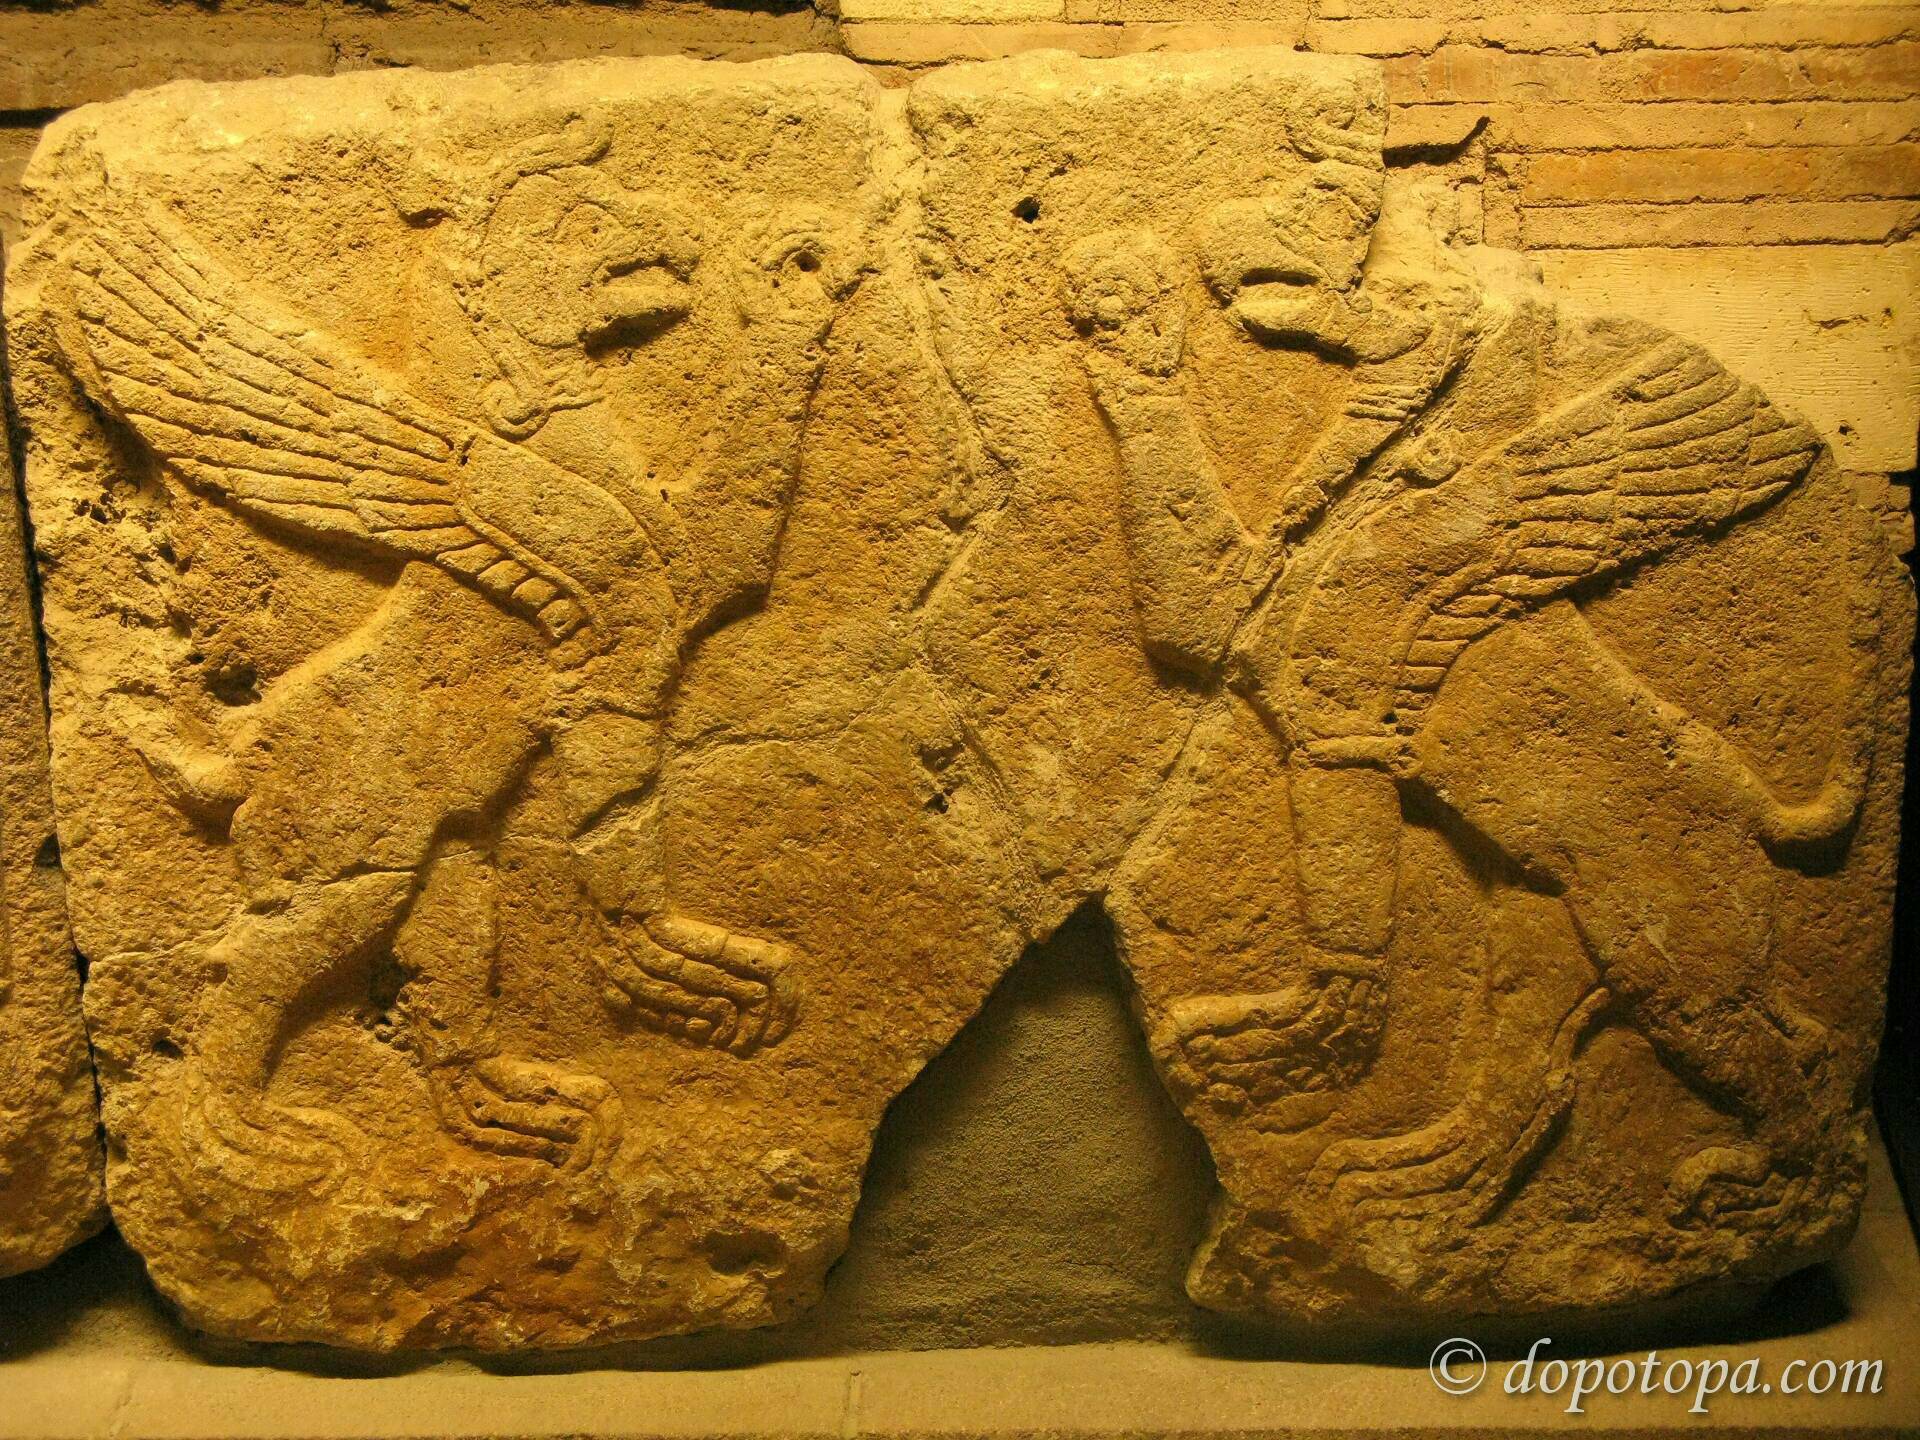 ankara_museum_stone_artefacts_48.JPG